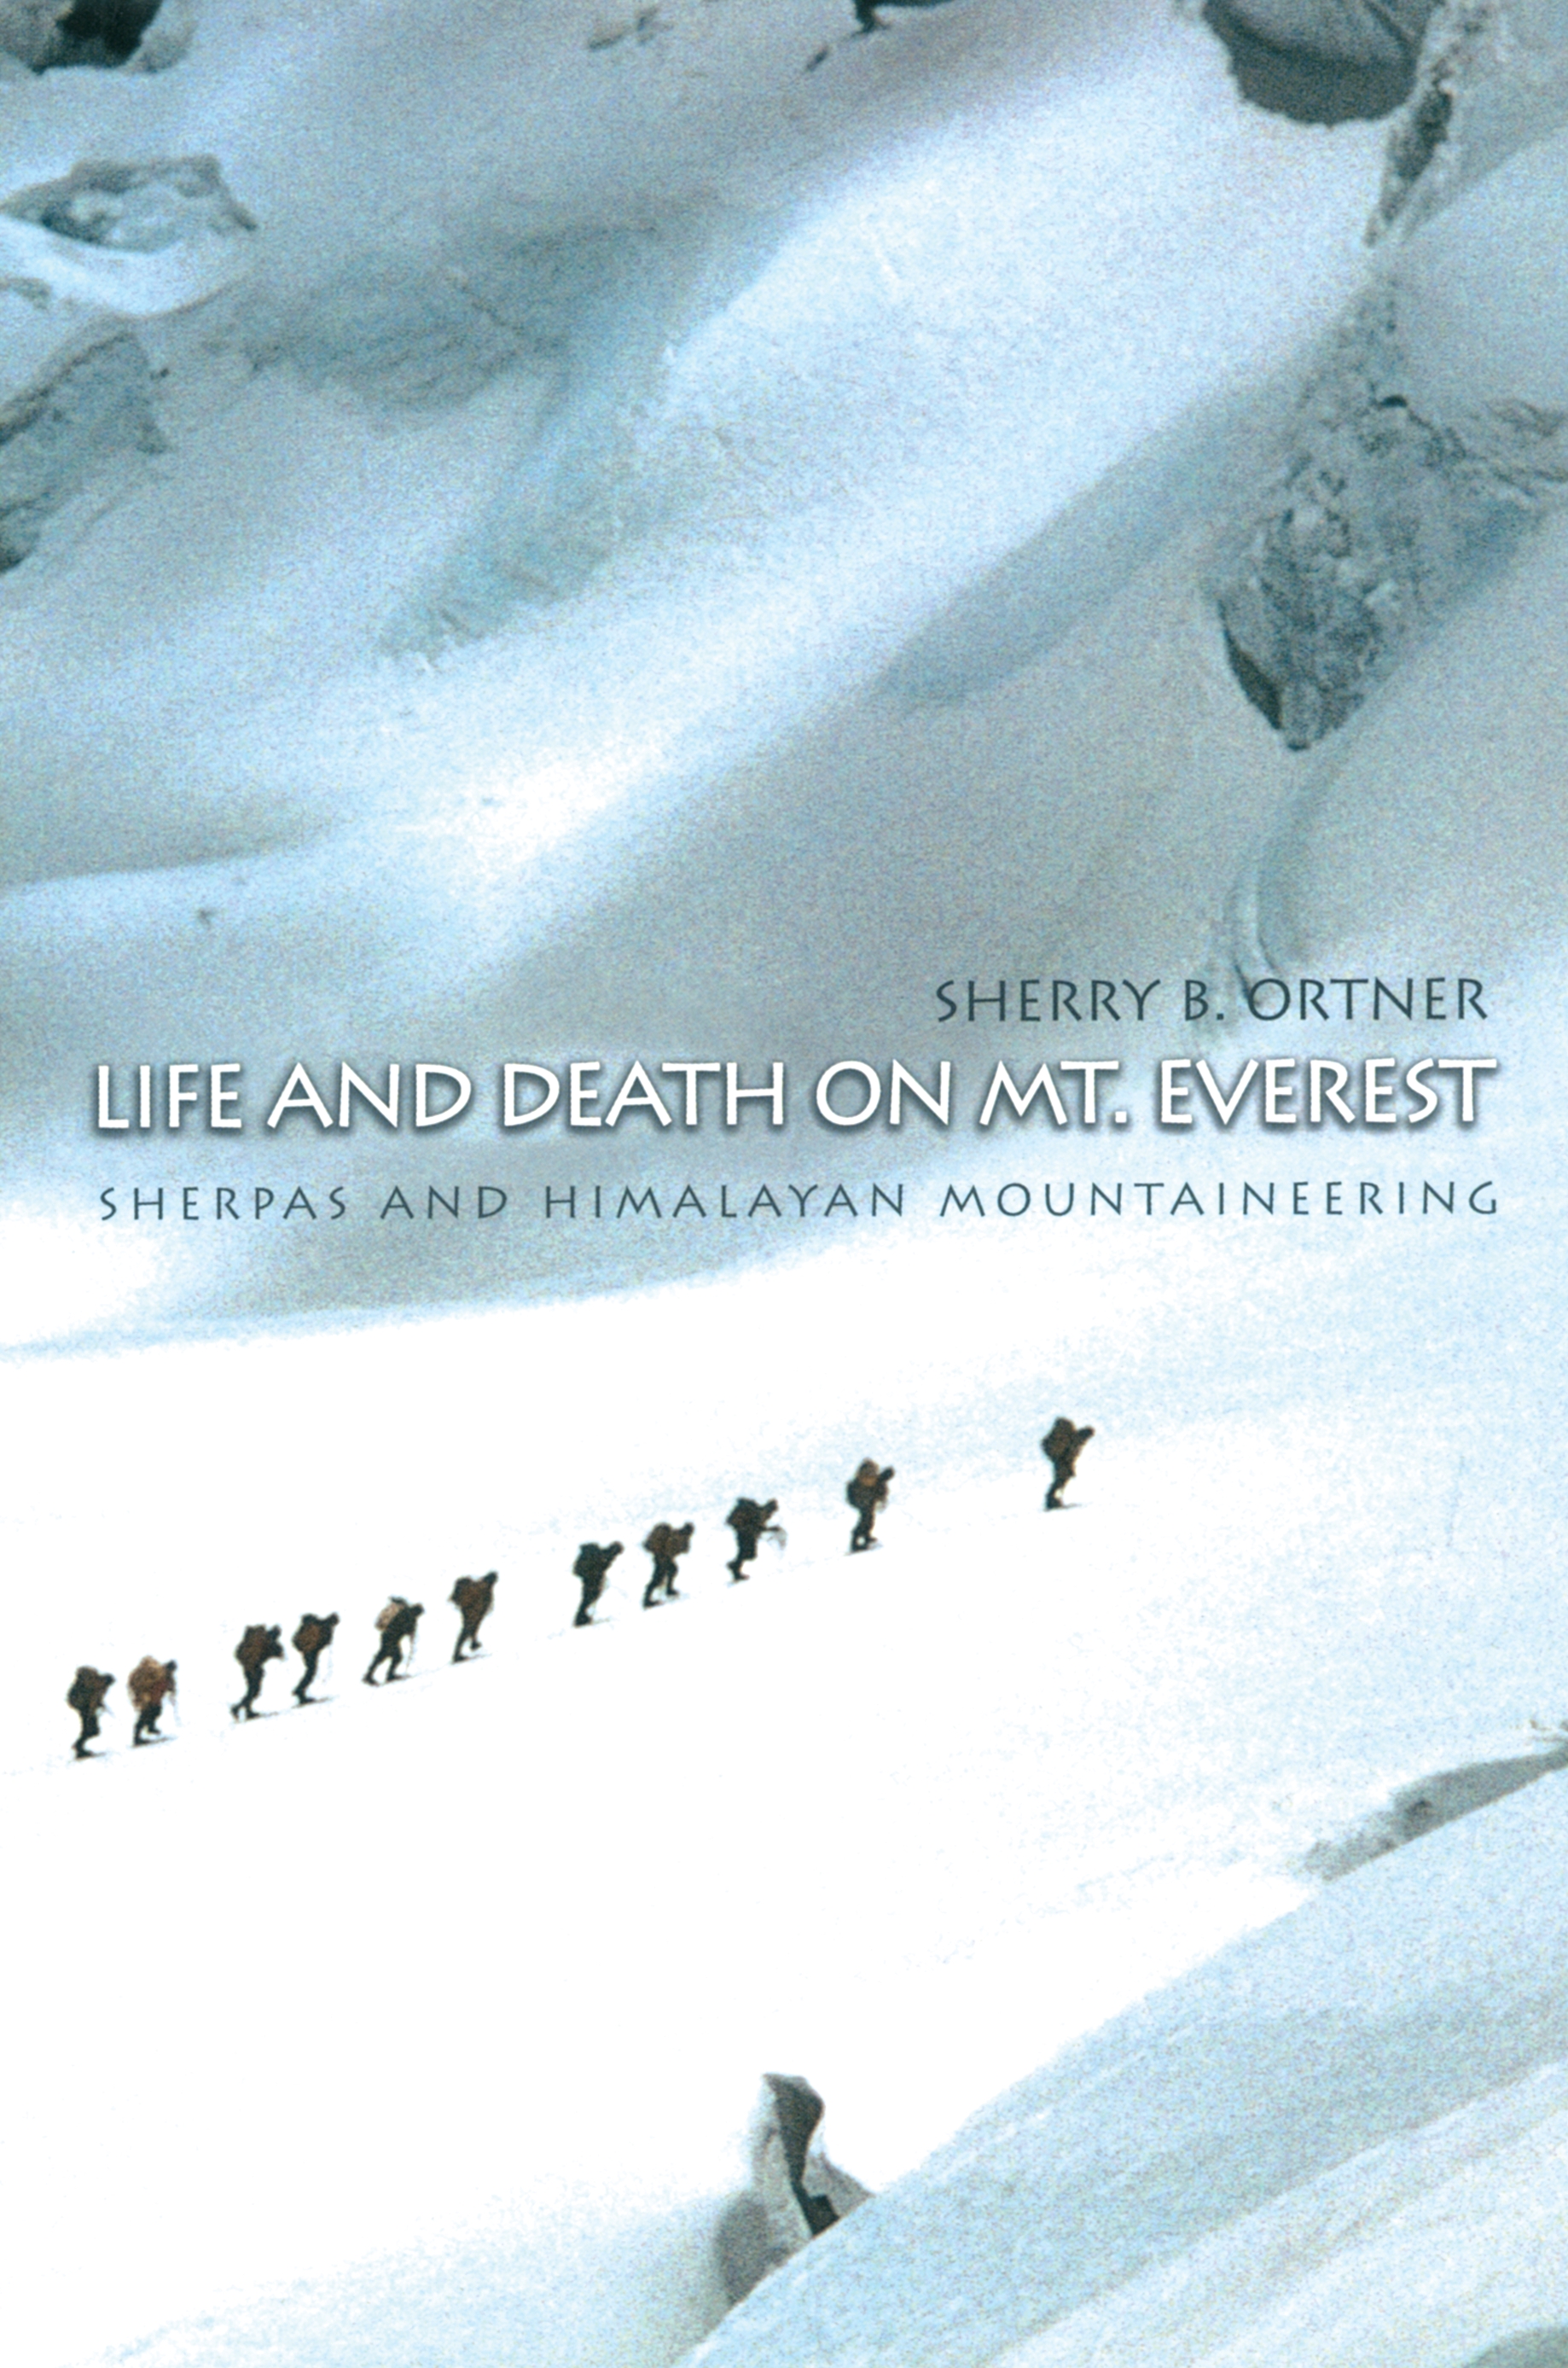 Sherry B. Ortner: Life and death on Mt. Everest (1999, Princeton University Press)